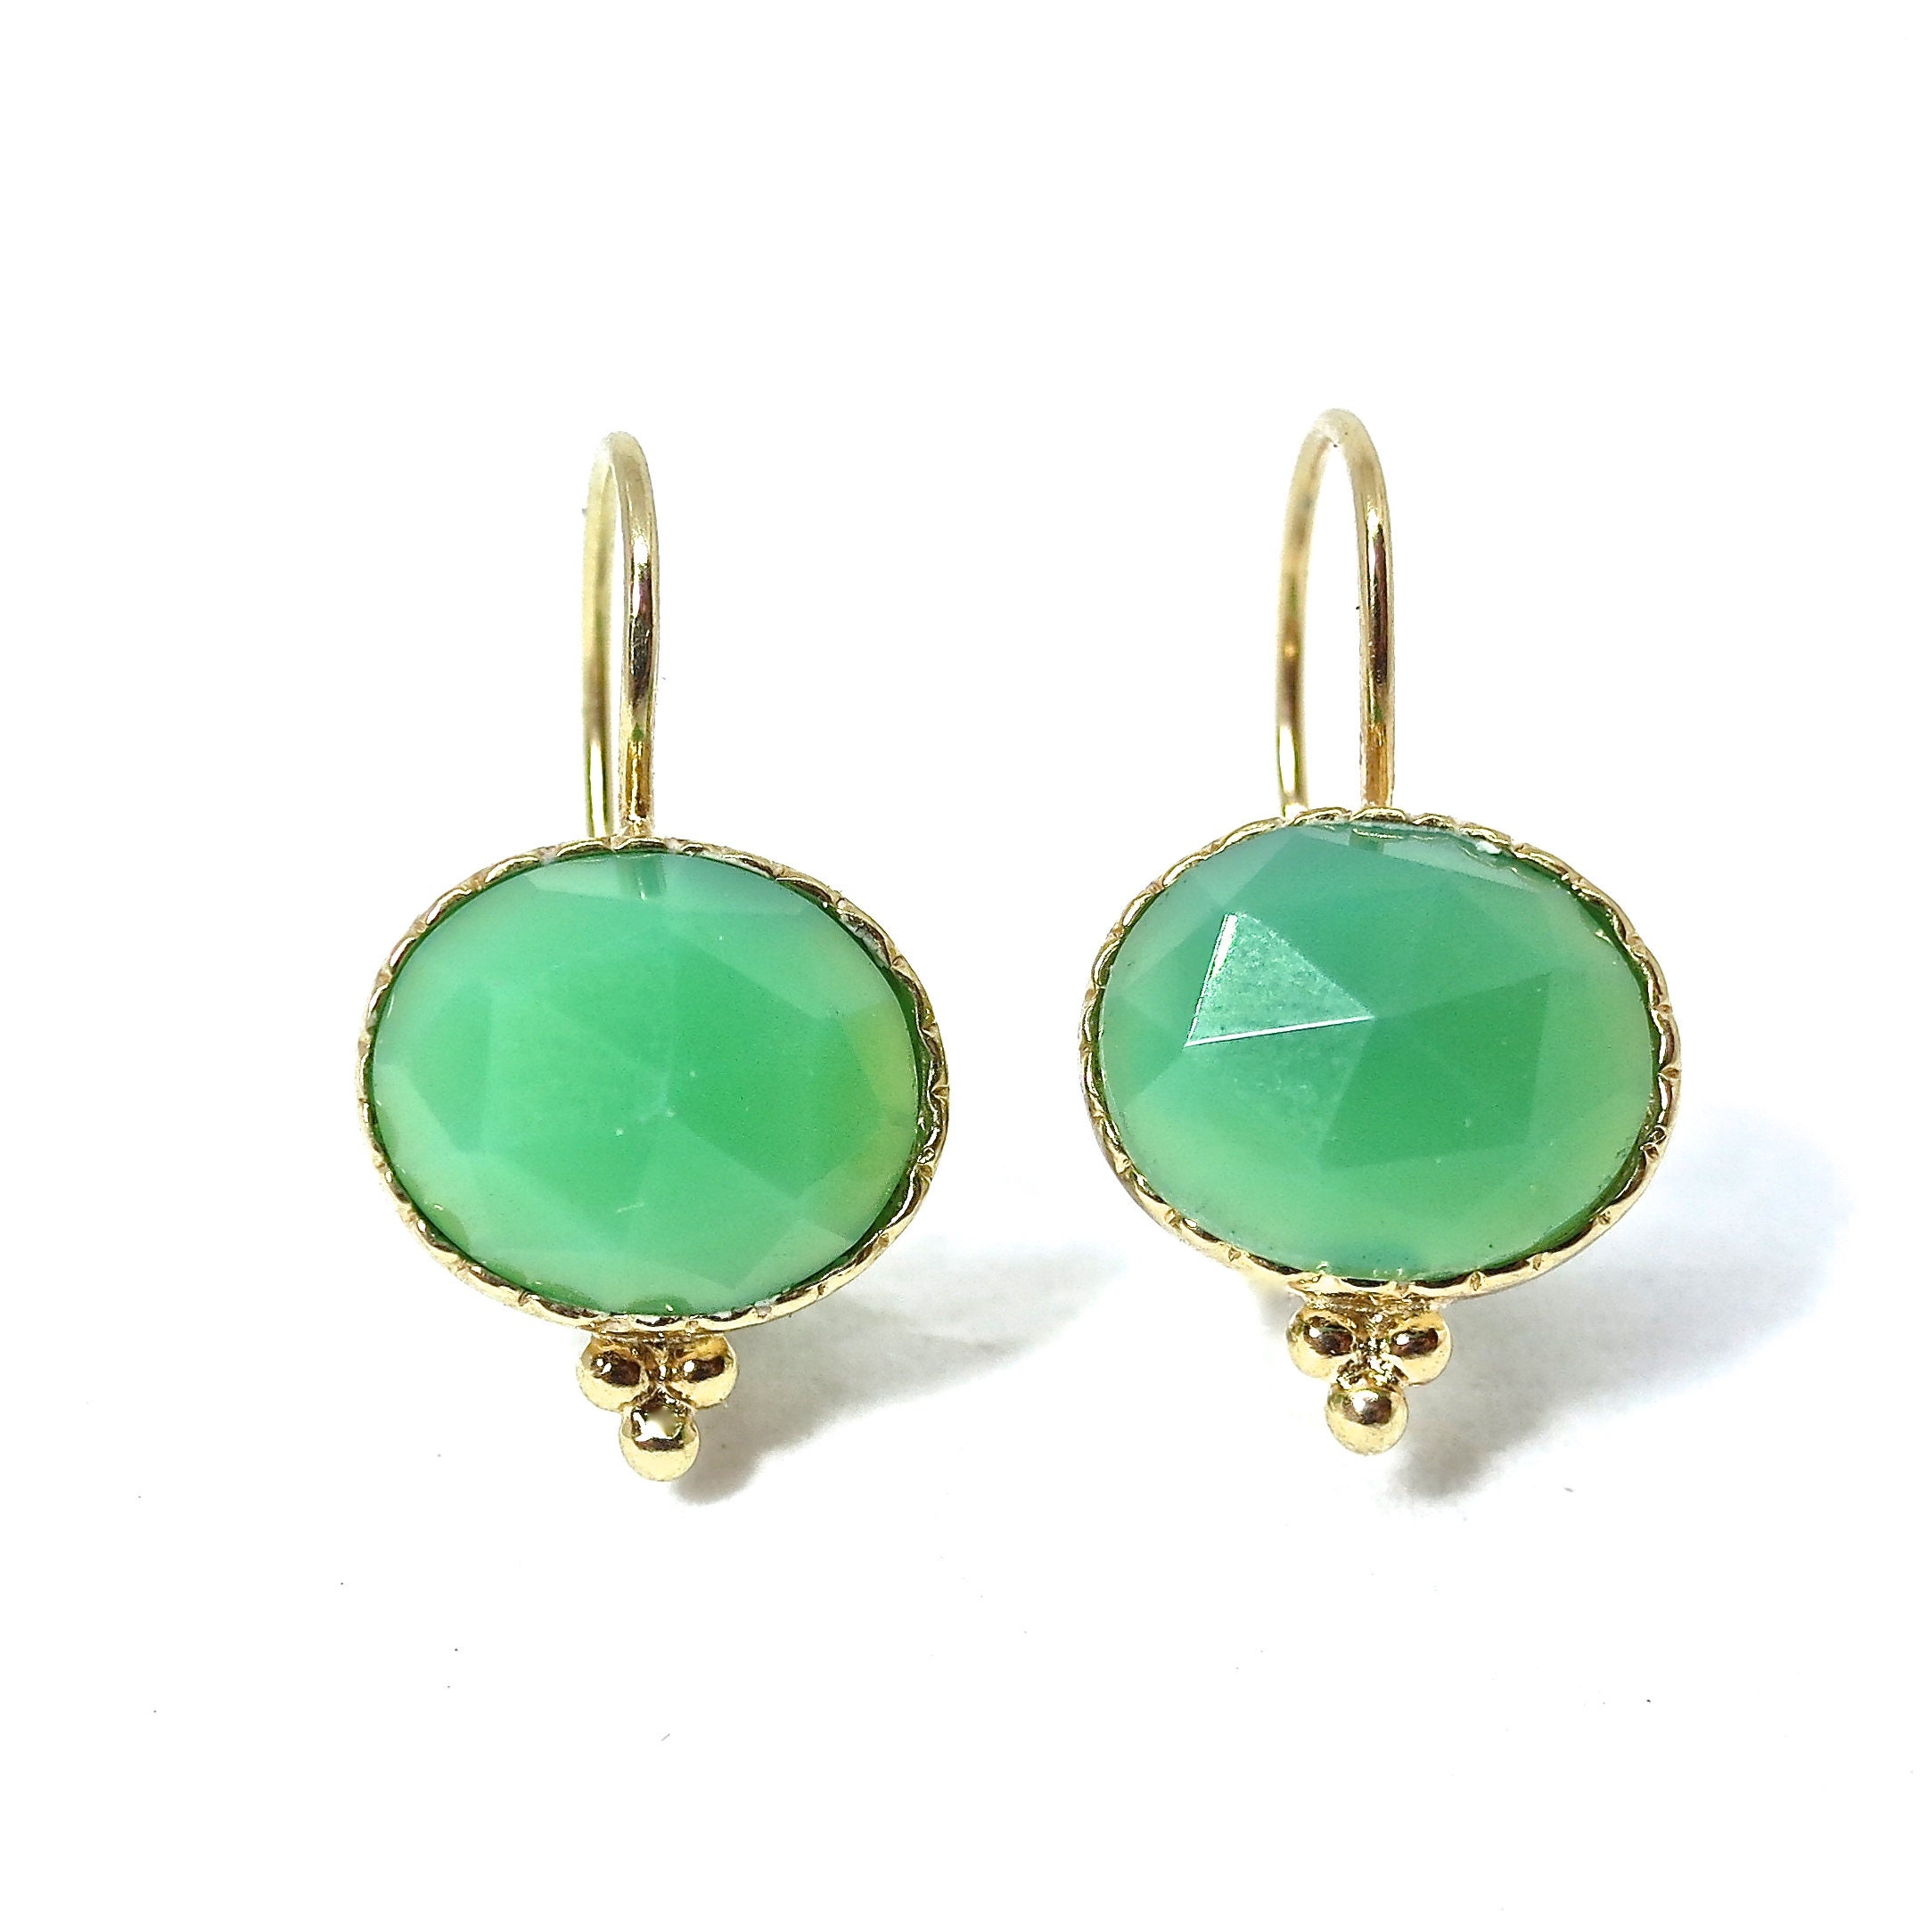 14K gold earrings Jade gold earrings Elegant earrings Green | Etsy